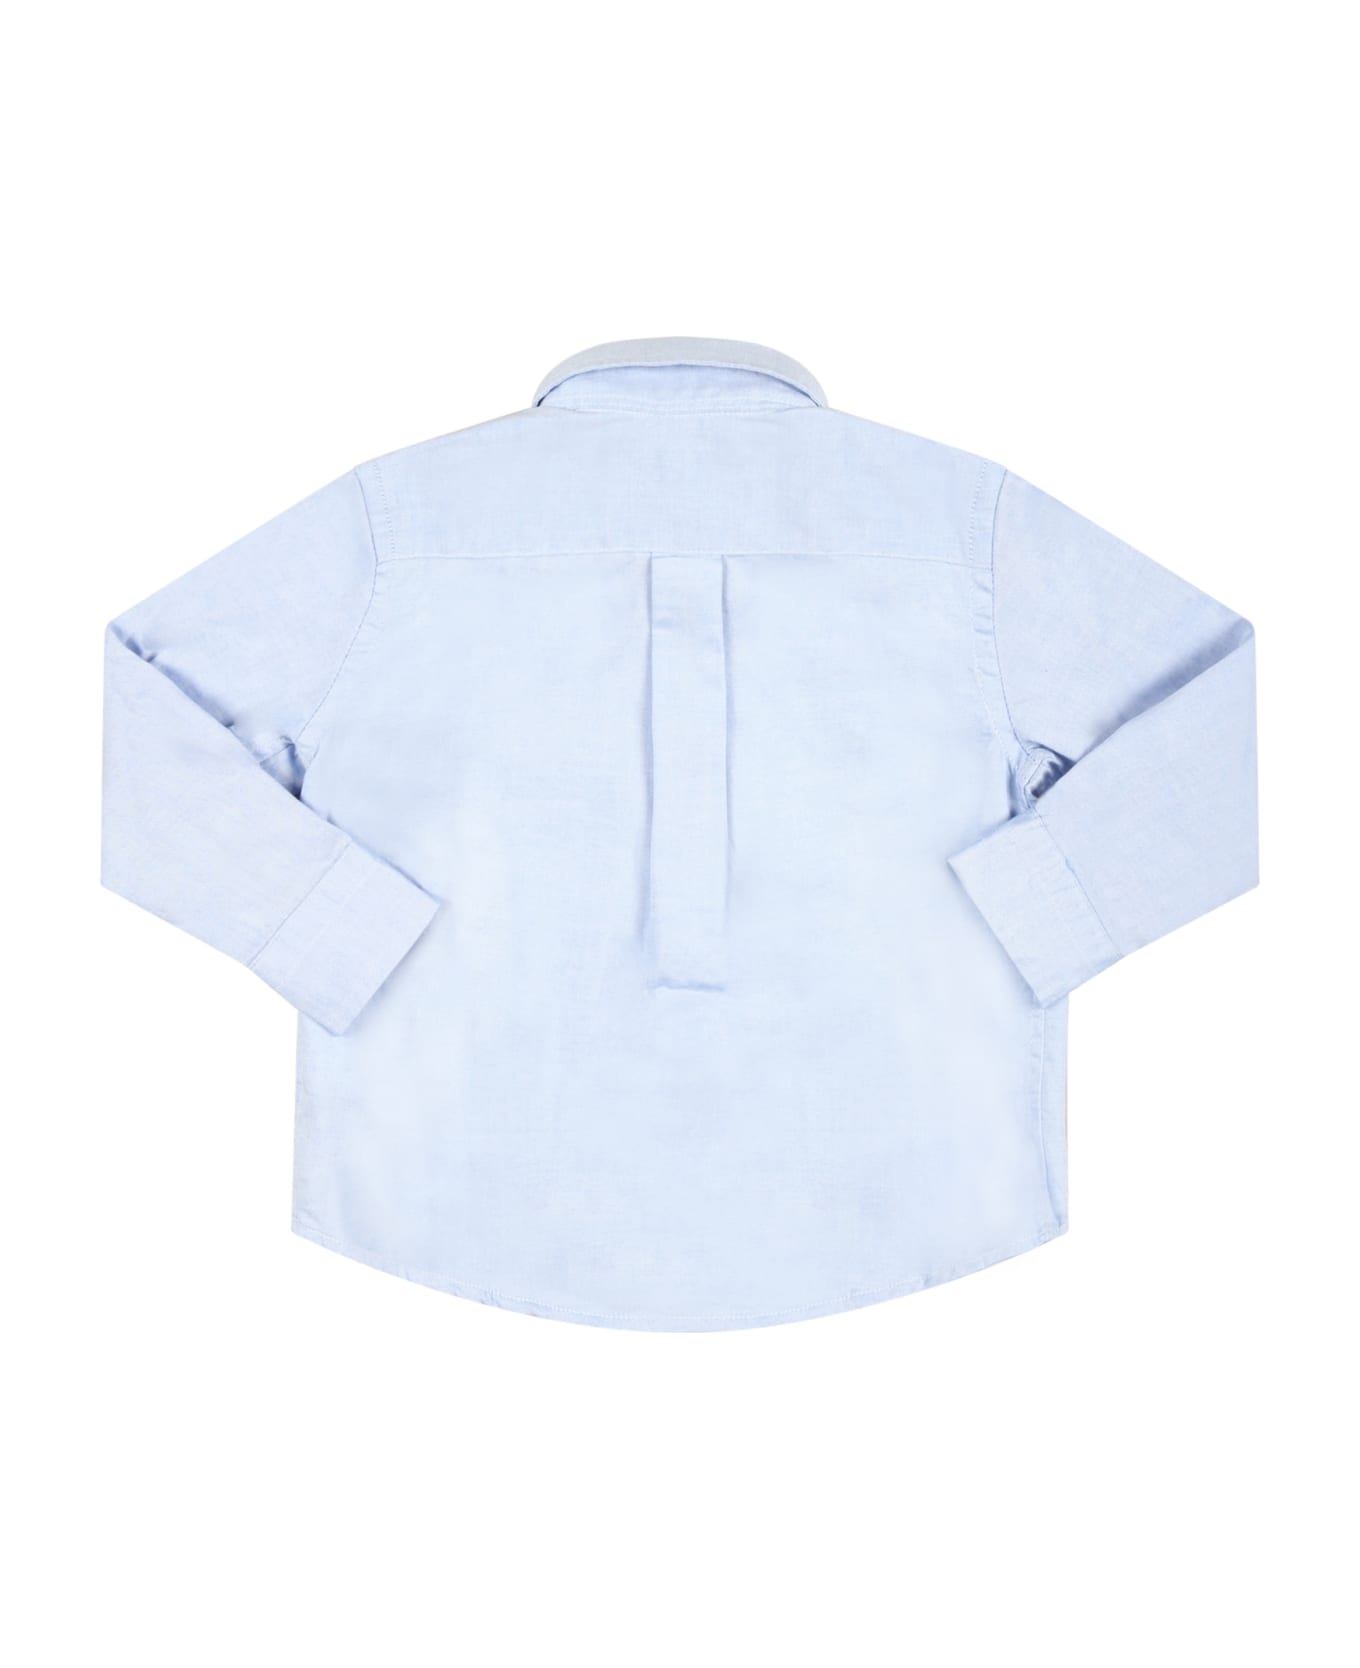 Ralph Lauren Light Blue Shirt For Baby Boy With Pony Logo - Light Blue シャツ